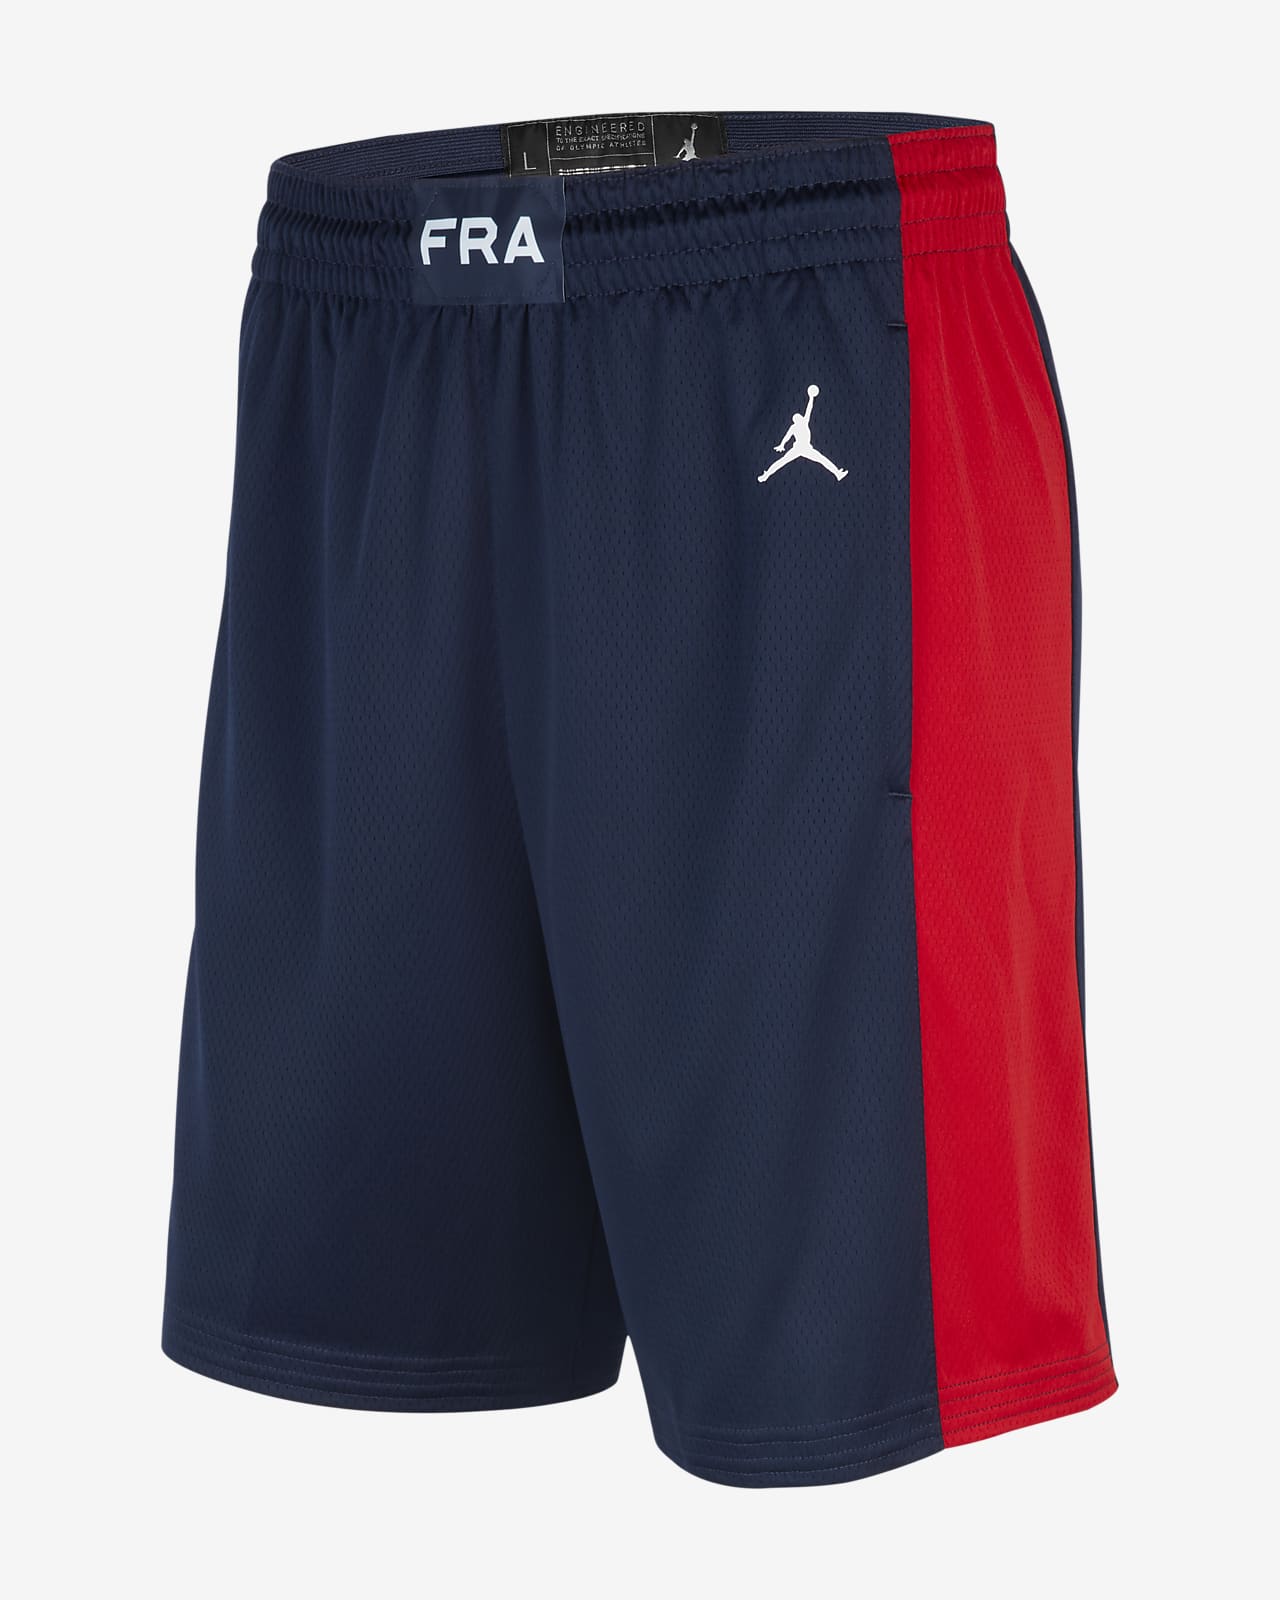 Short de basketball France Jordan (Road) Limited pour Homme